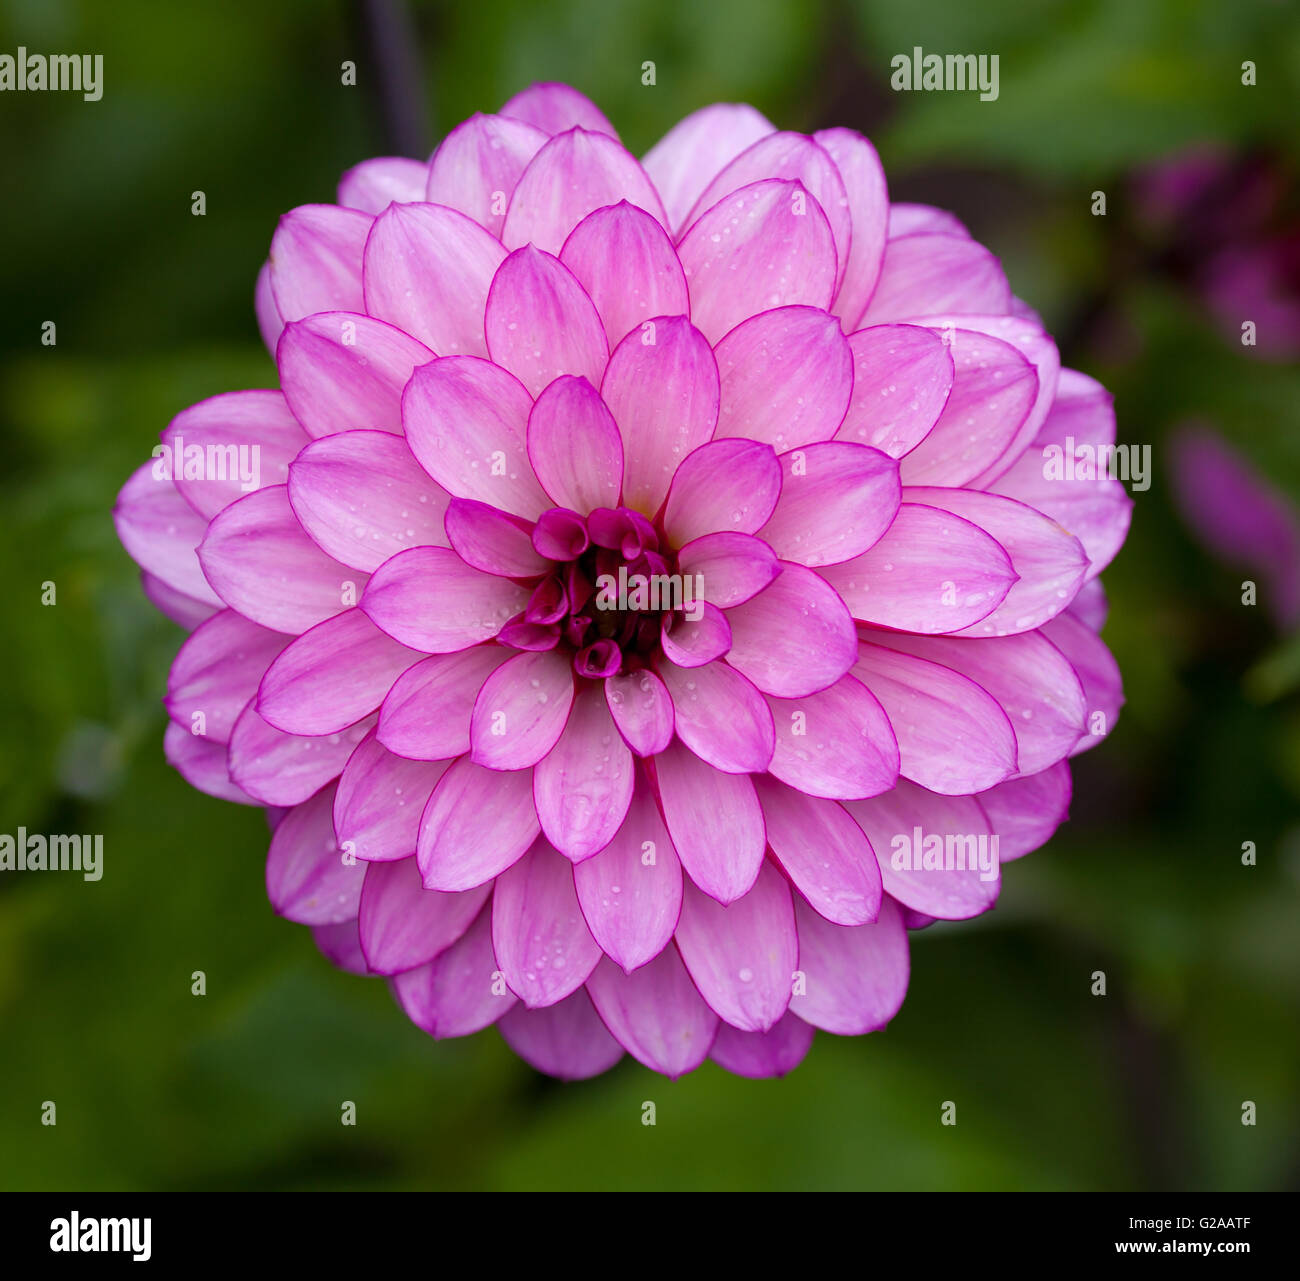 Rosa Dahlie Blume in voller Blüte Nahaufnahme Stockfoto